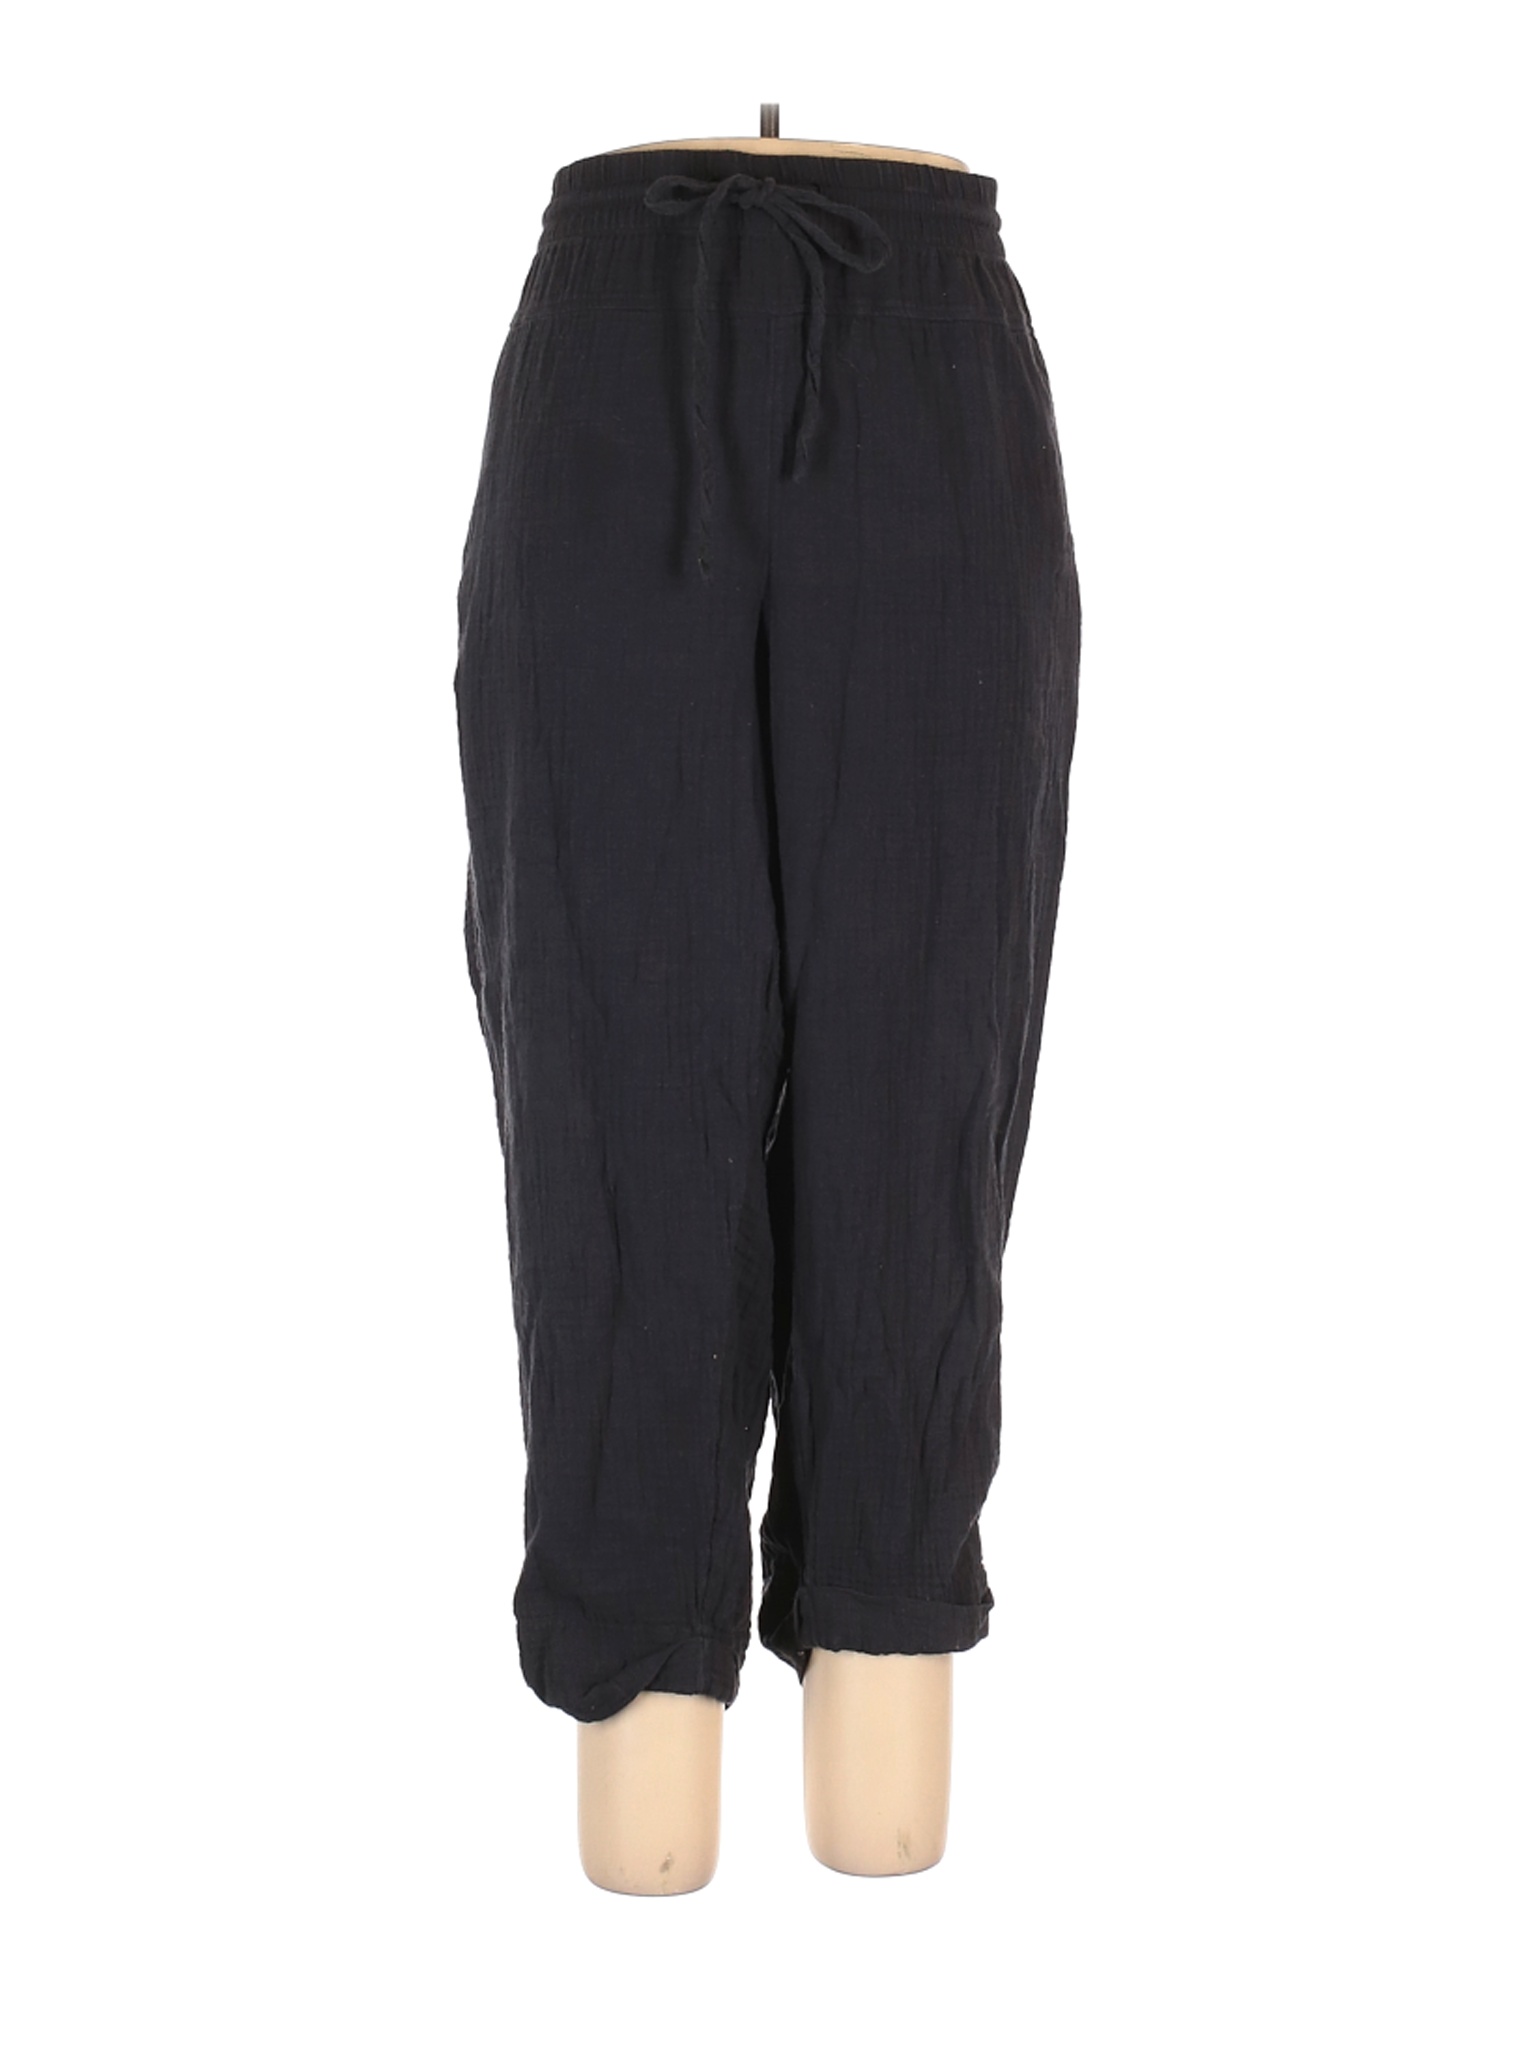 Universal Thread Women Black Casual Pants 2X Plus | eBay